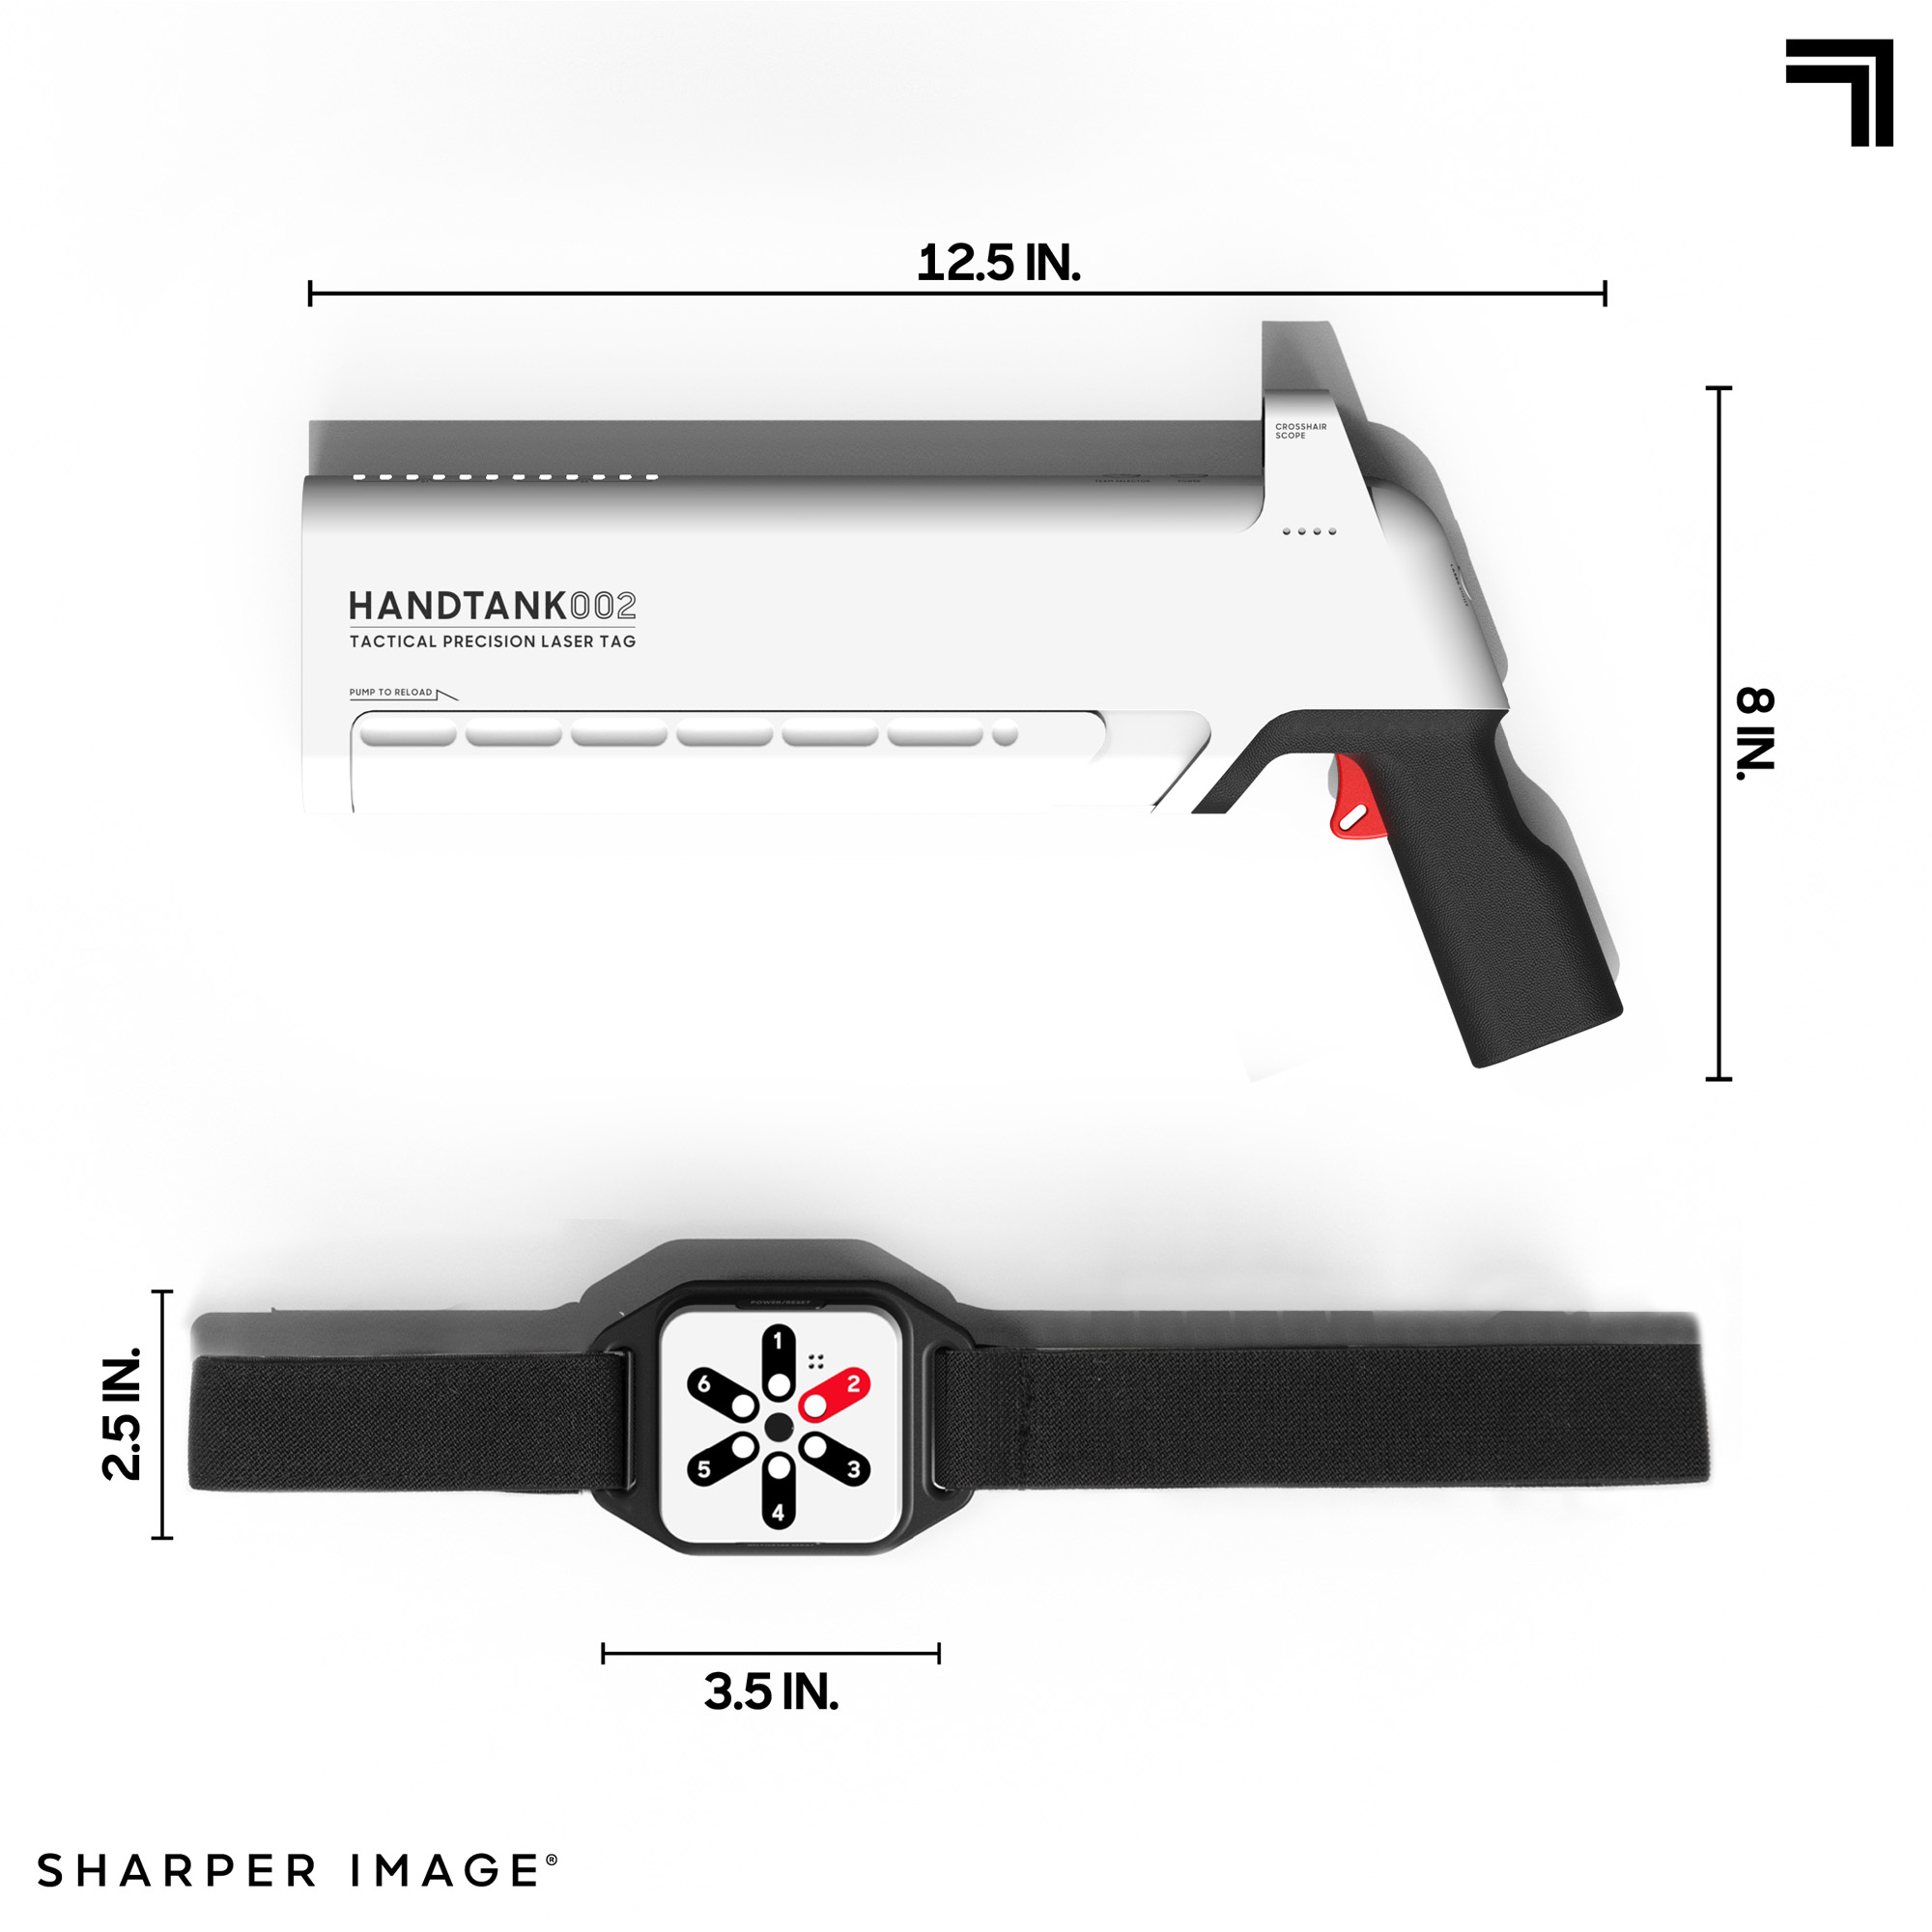 Sharper image - fucili laser tag blast pack sharper image - Sharper Image